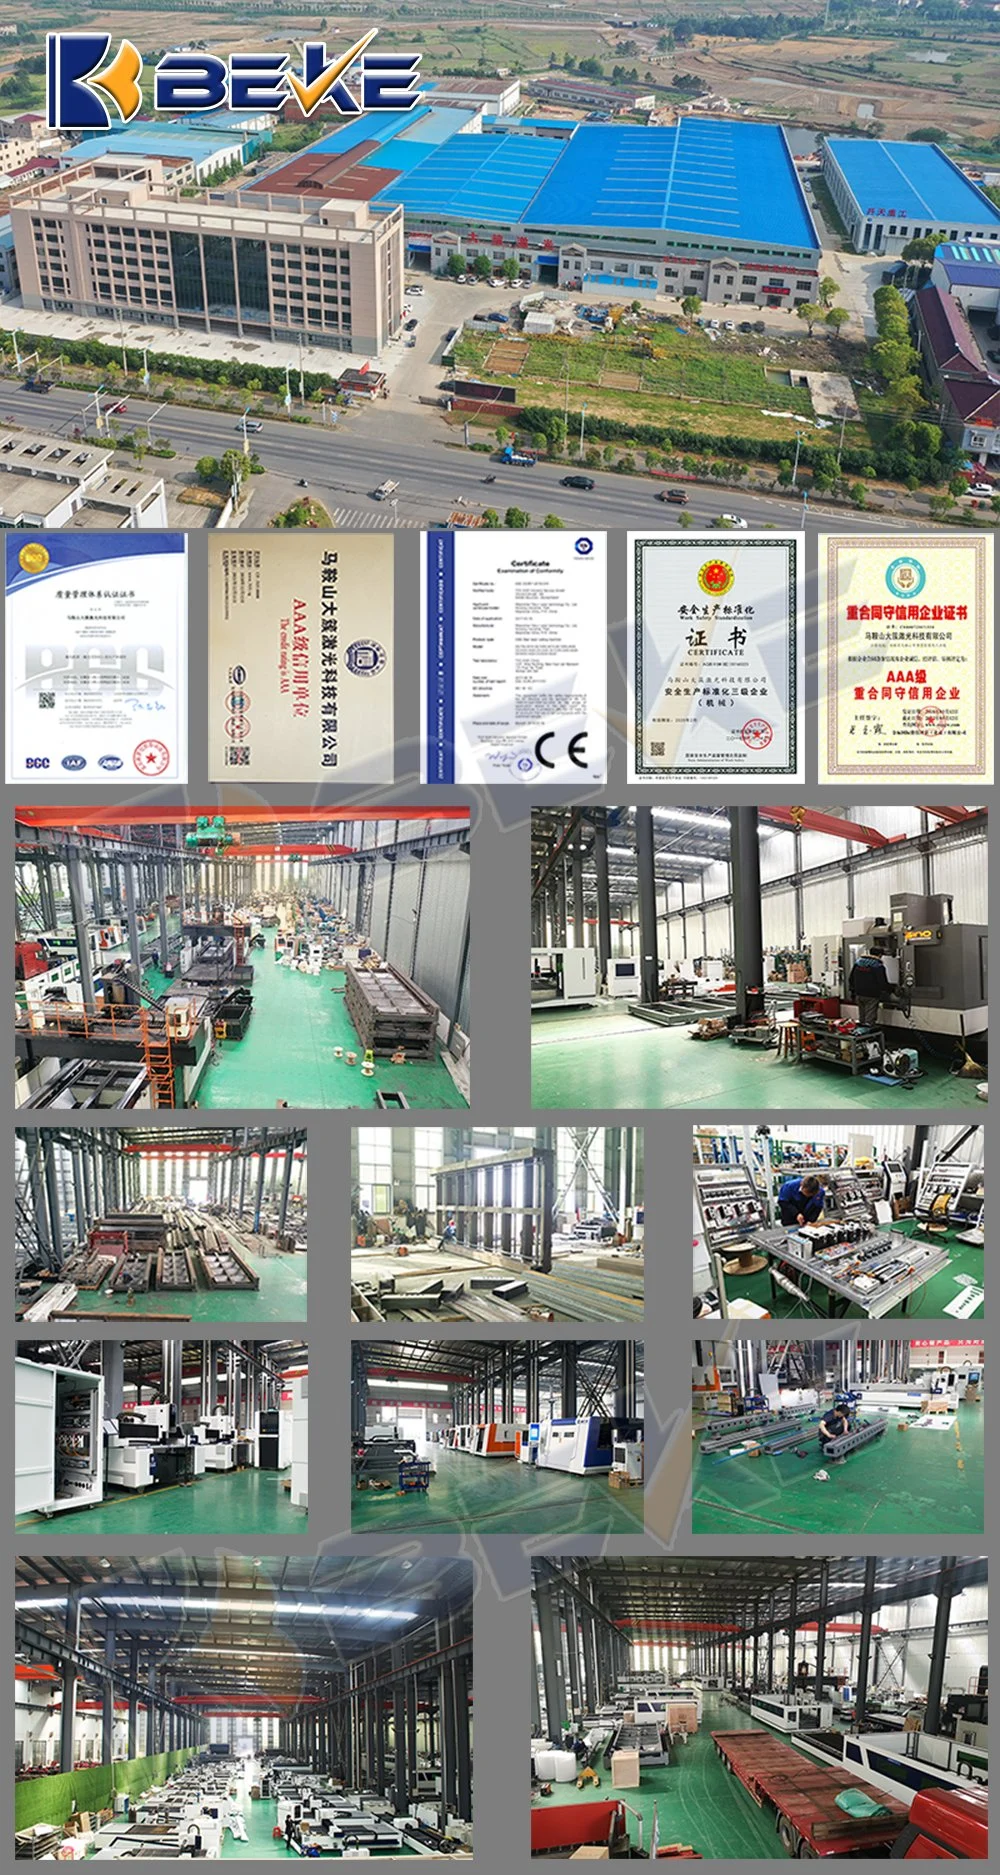 Nanjing Beke Hot Sales 4020 3000W Aluminium Plate Tube and Plate Fiber Laser Cut Machine